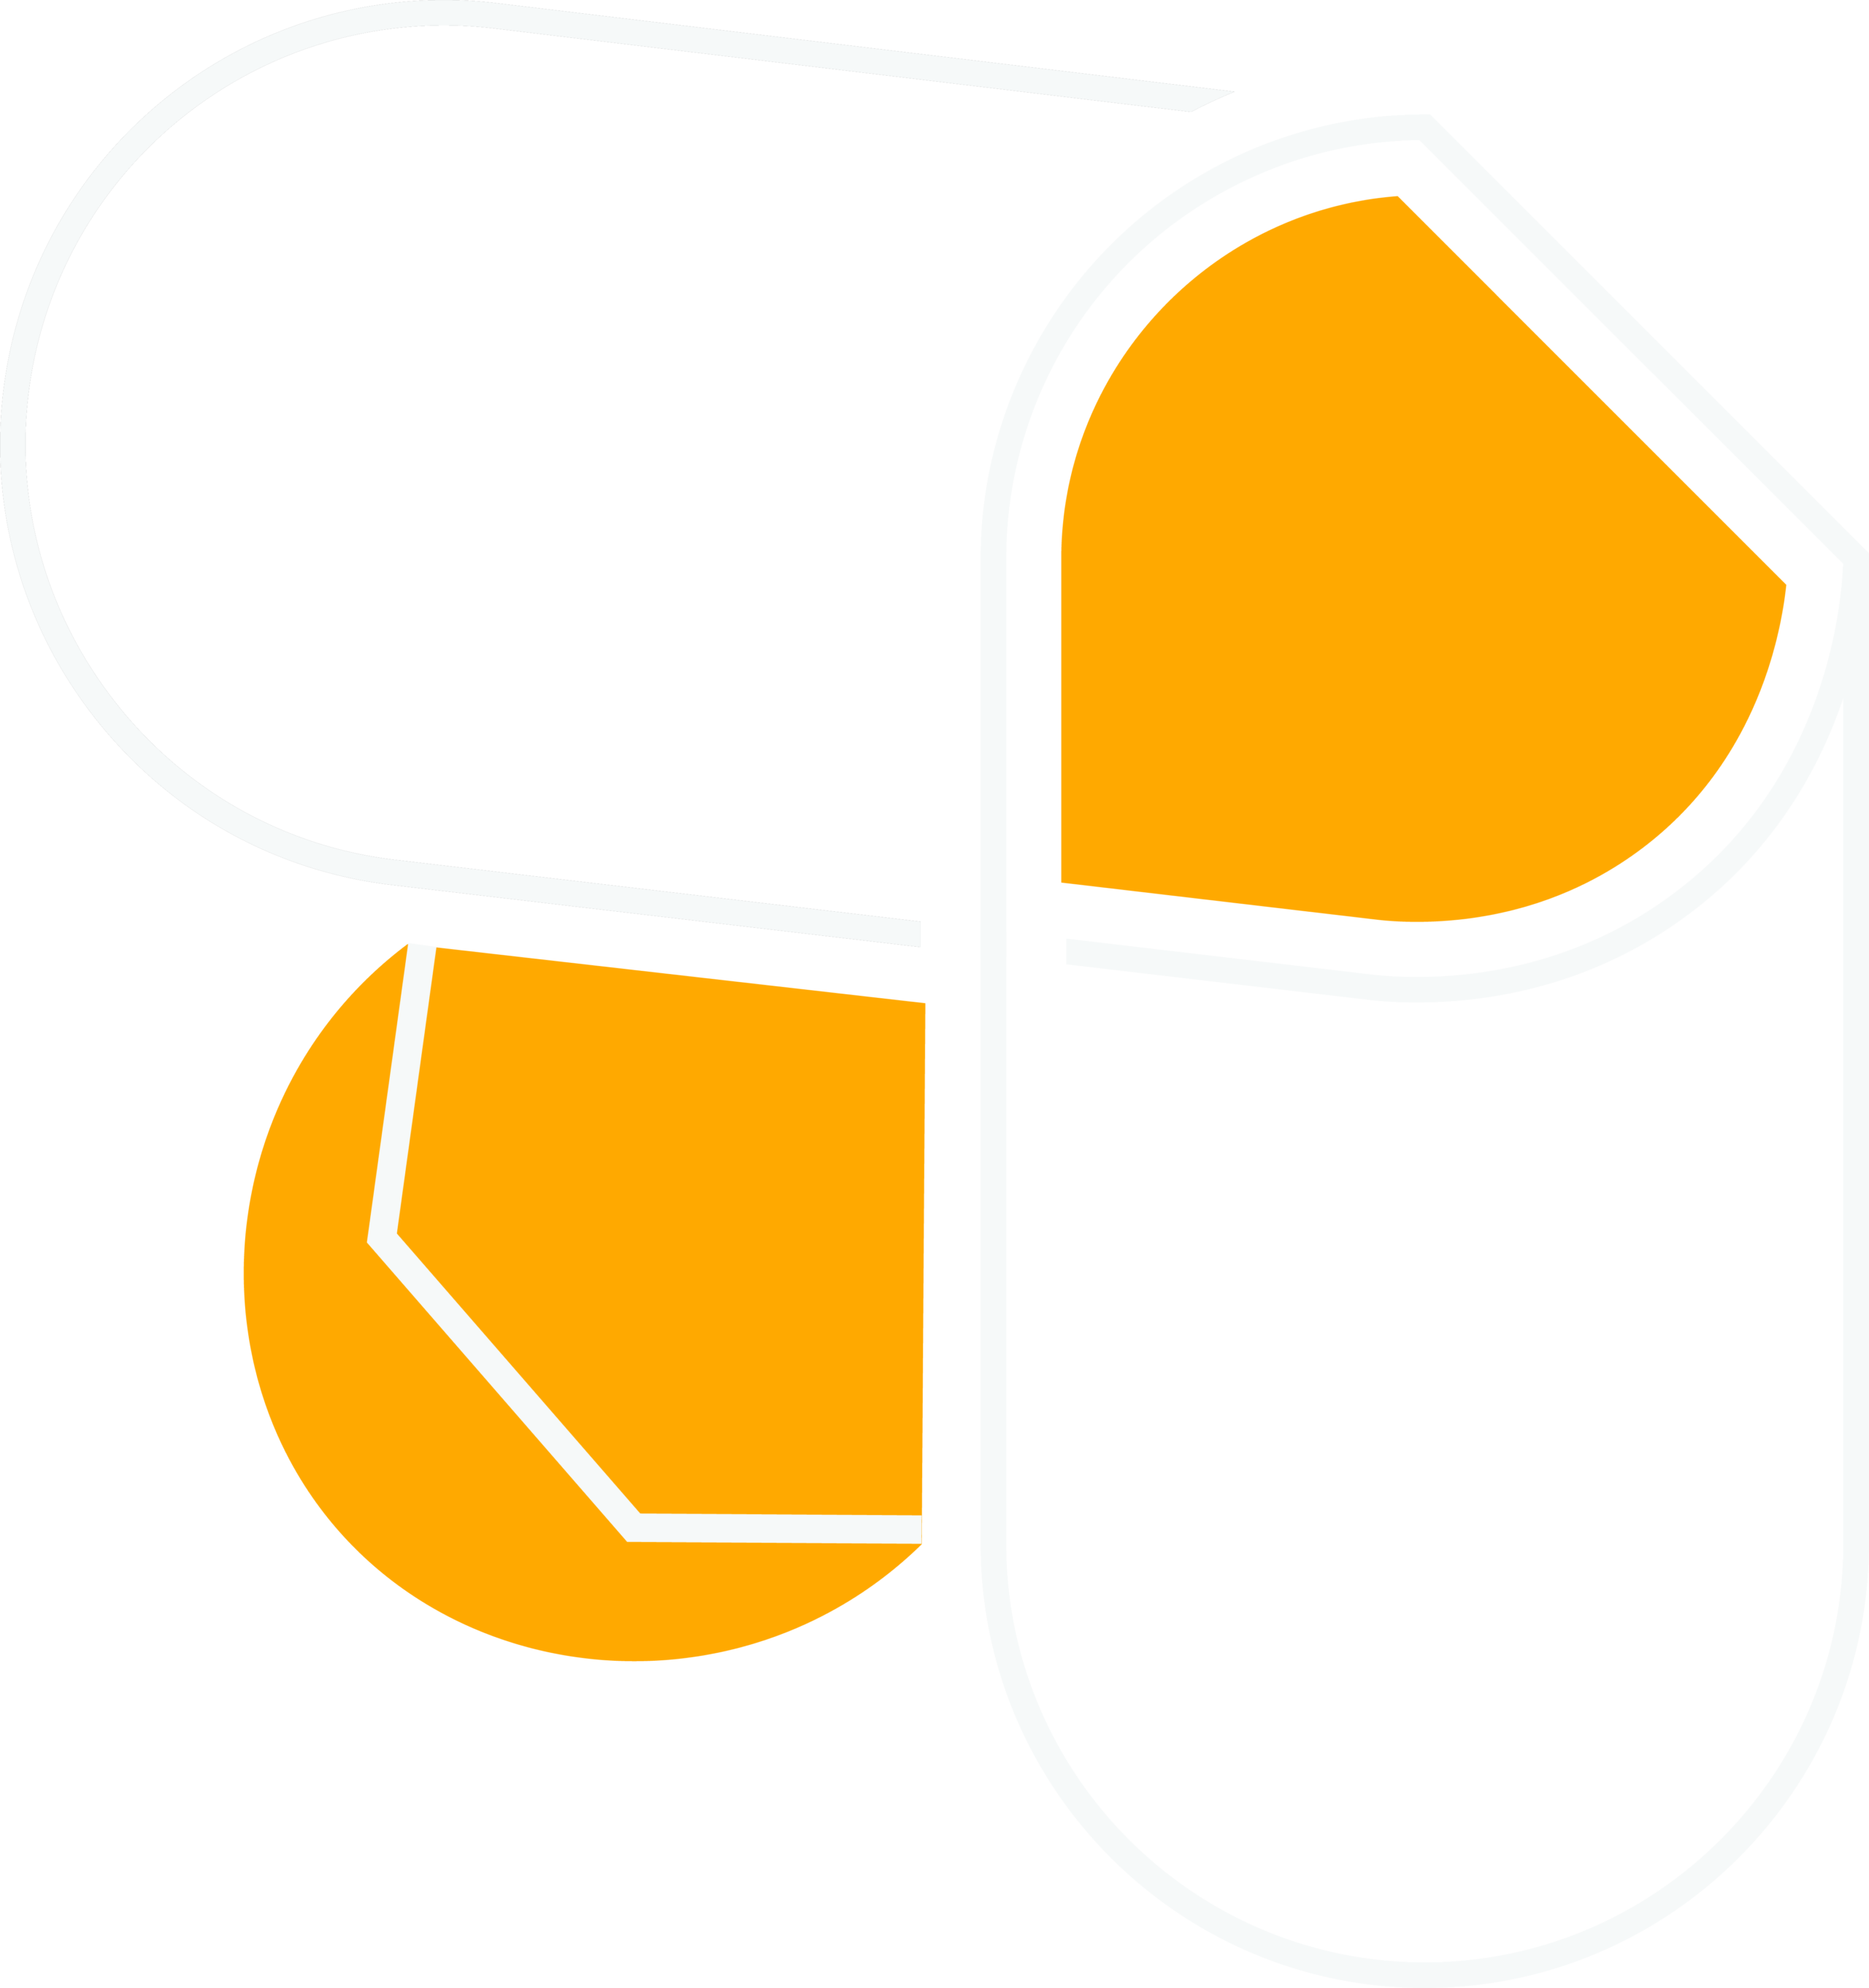 Engels: "Ident2be logo: stylized representation of identity and access management." Nederlands: "Ident2be logo: gestileerde weergave van identiteits- en toegangsbeheer."